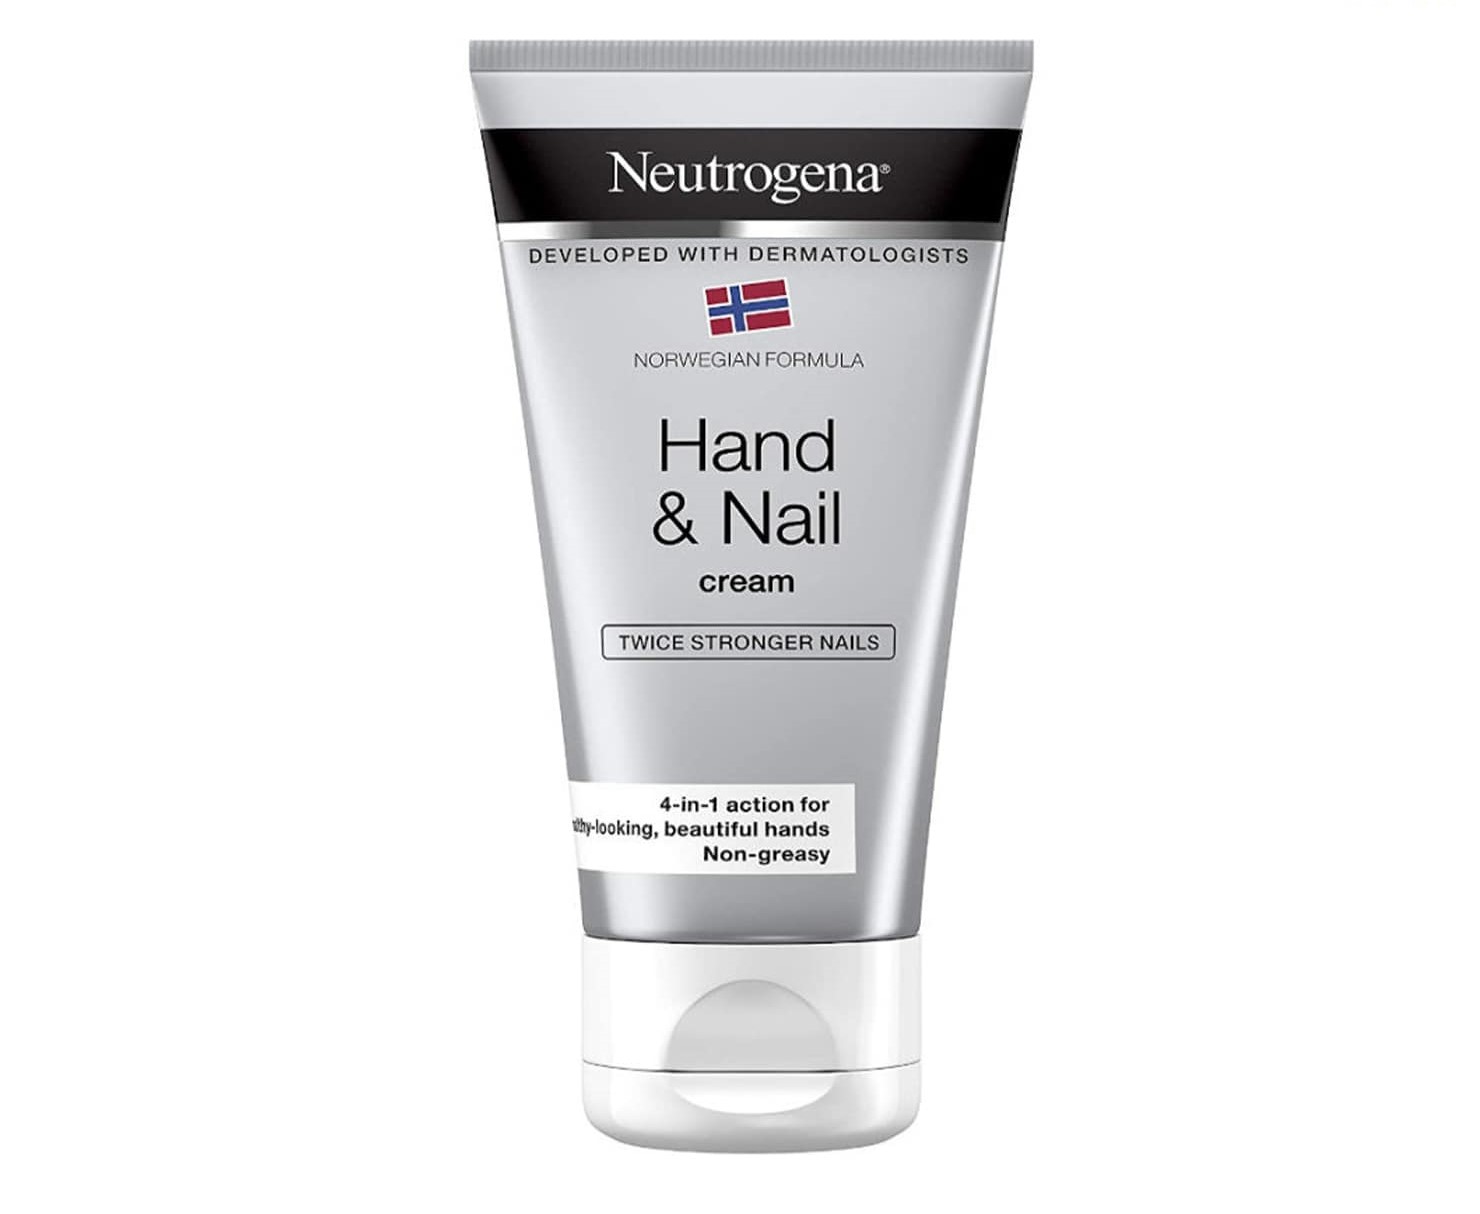 Neutrogena-HandNail-Cream-min (2)